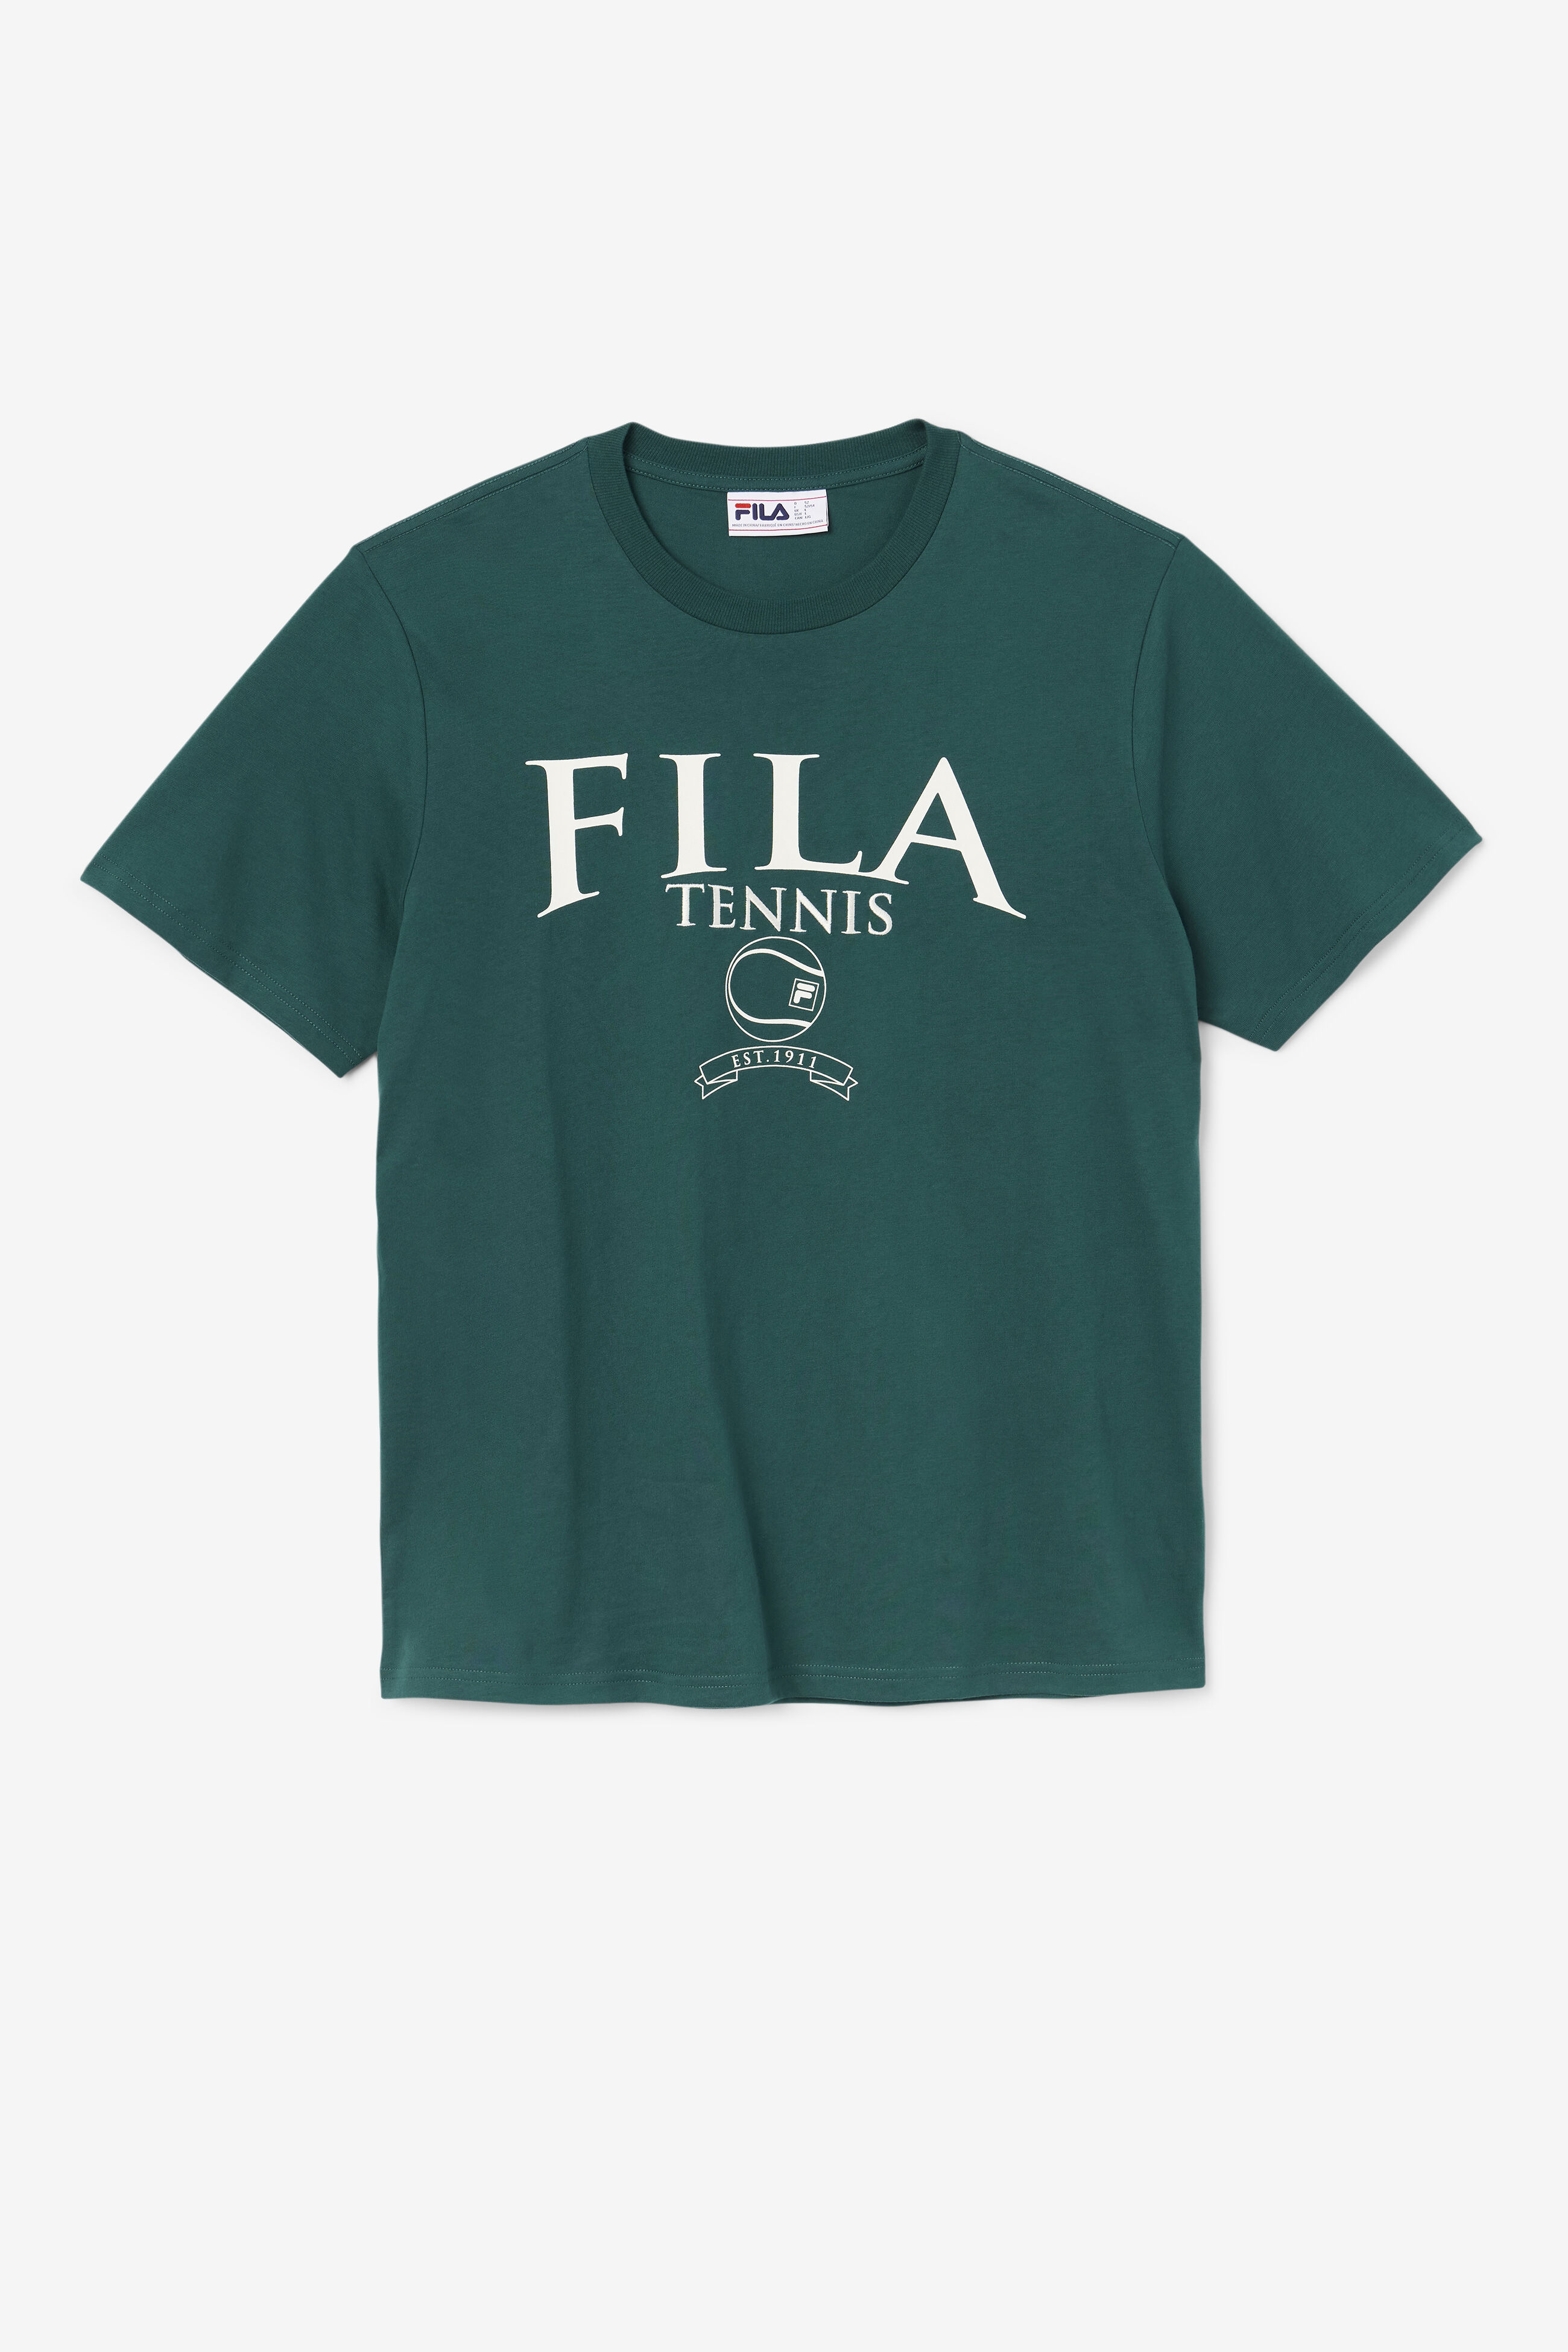 Saran Tennis T-shirt | Fila LM23C639